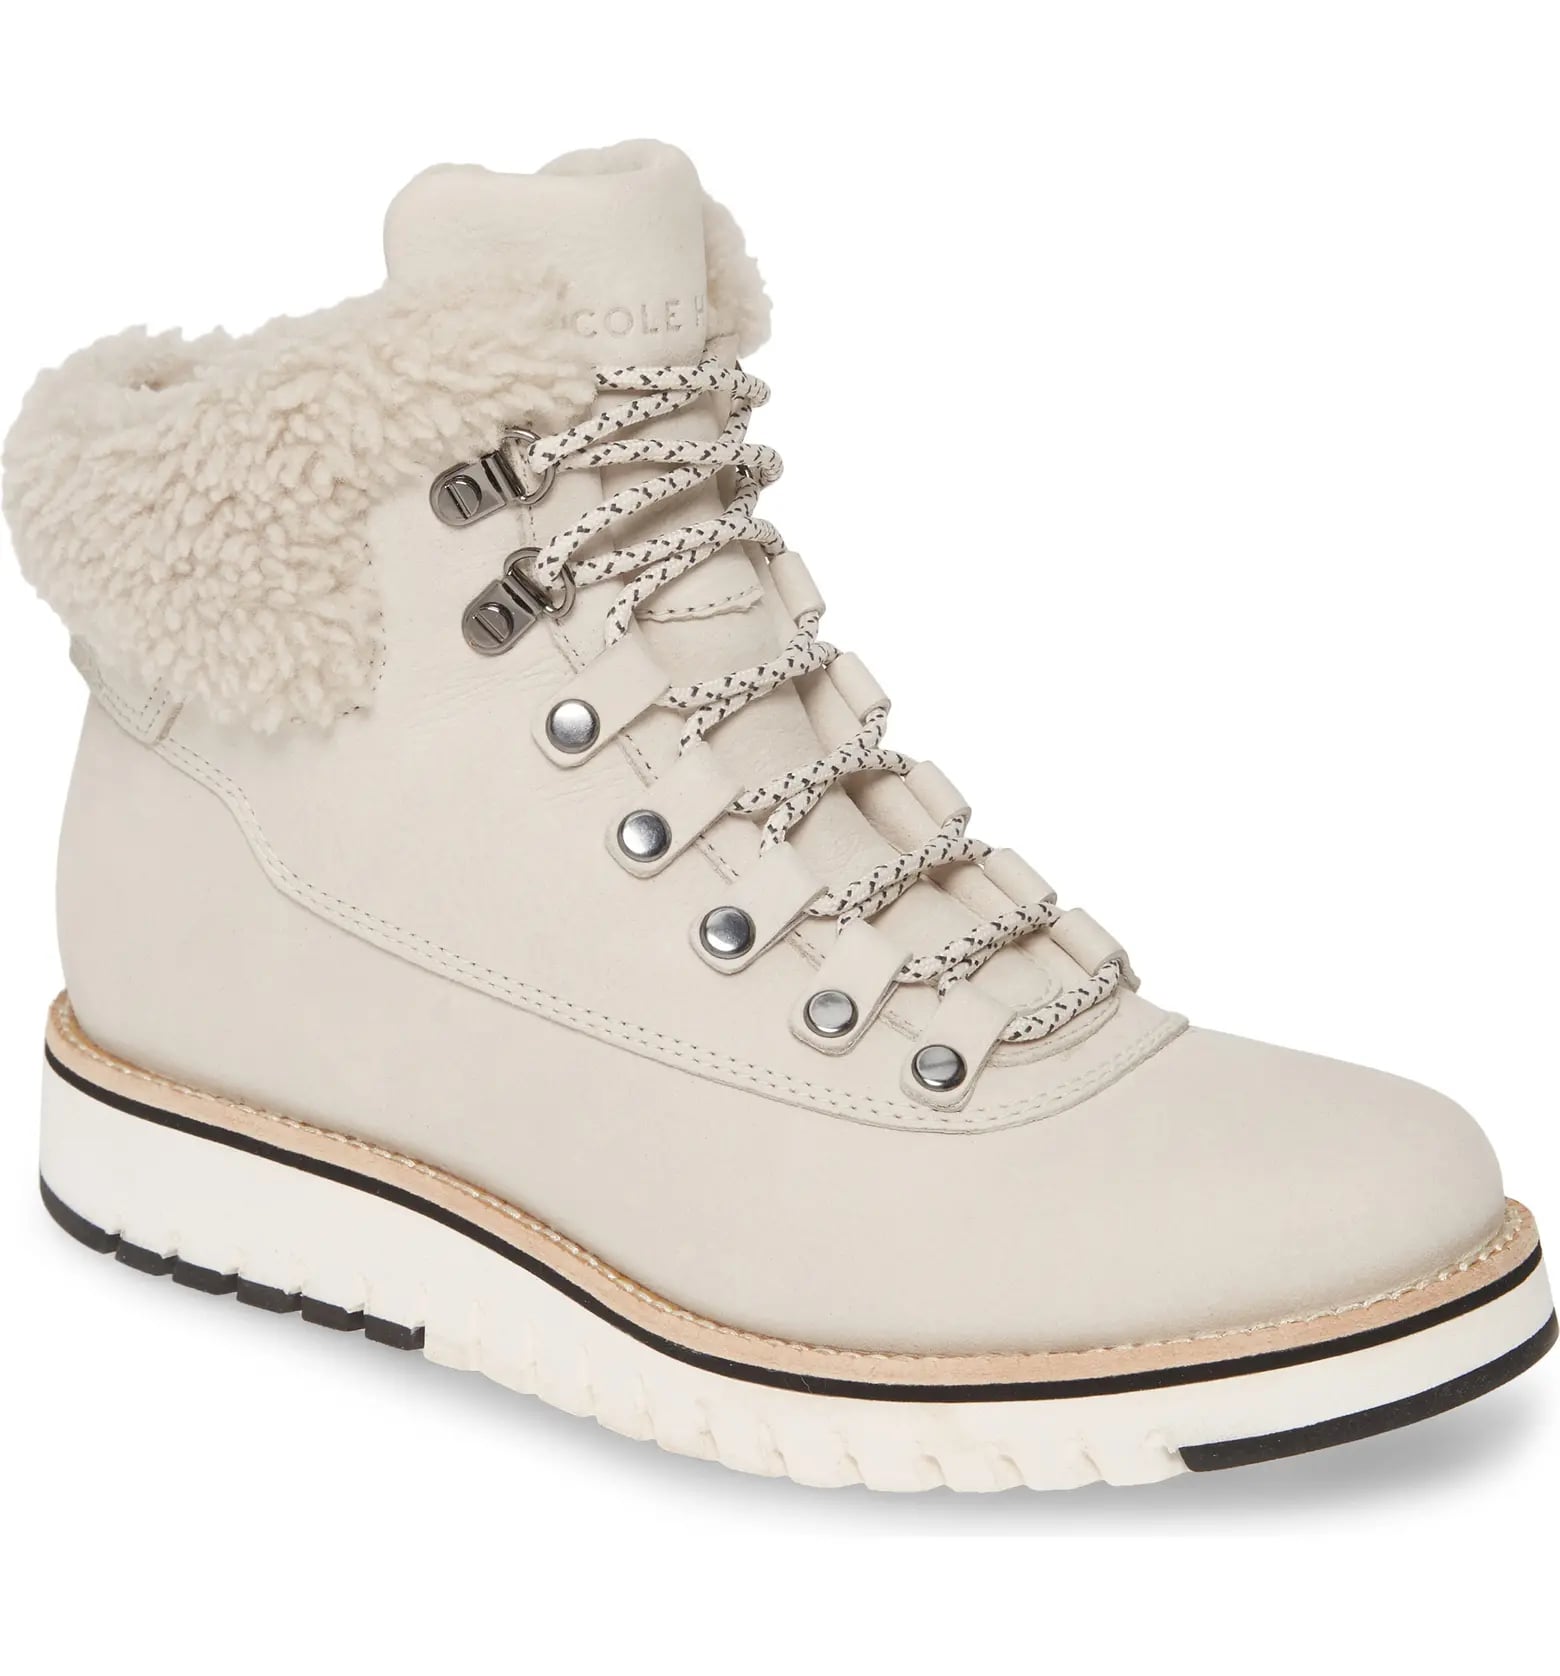 stylish snow shoes